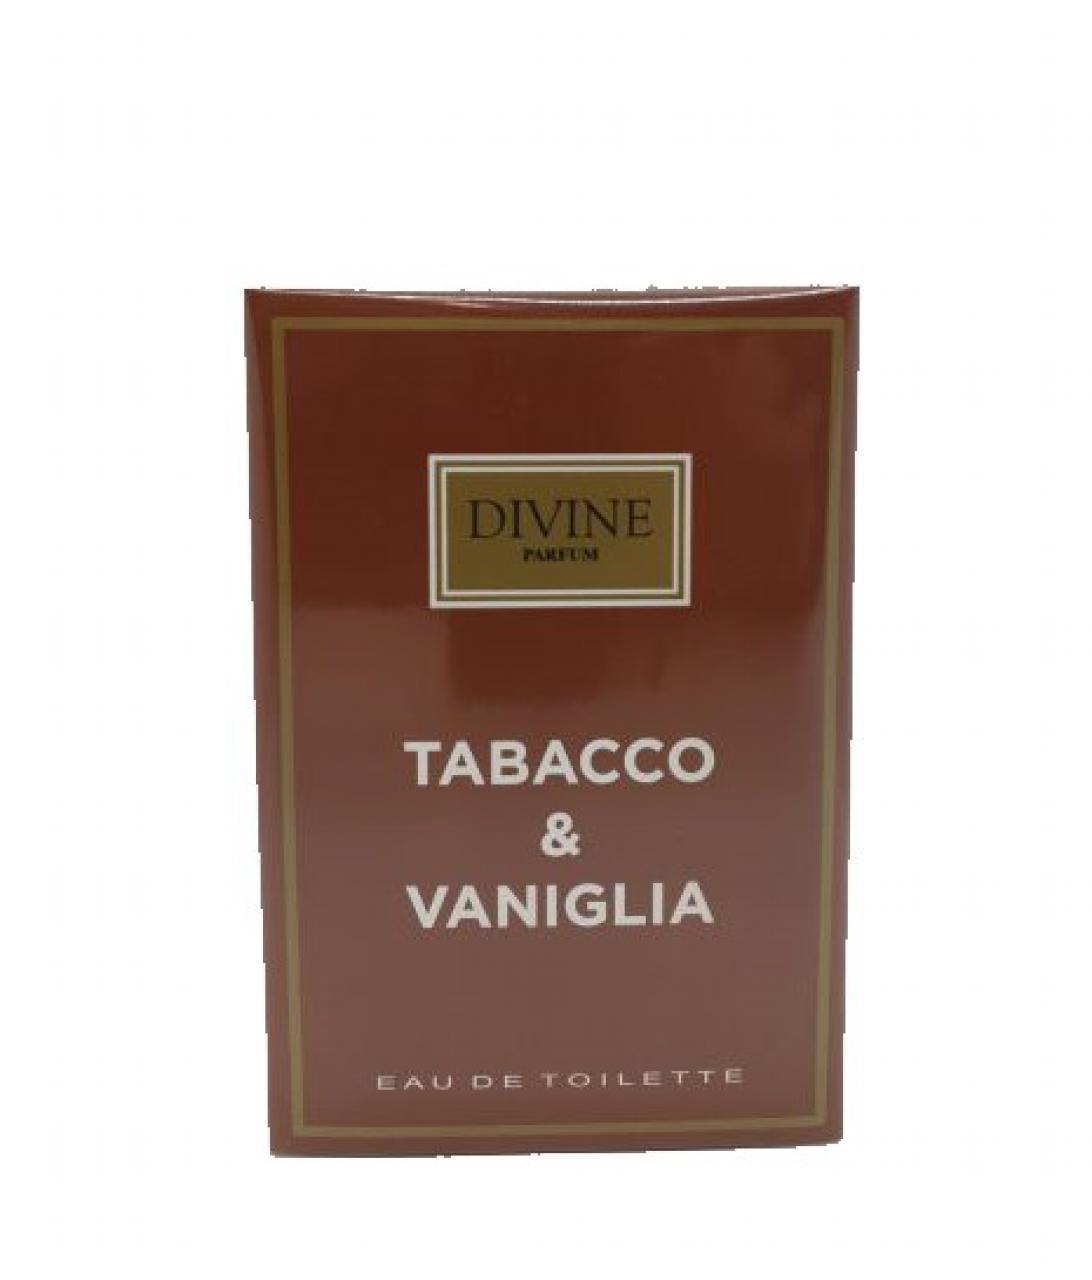 DIVINE PARFUM – TABACCO & VANIGLIA